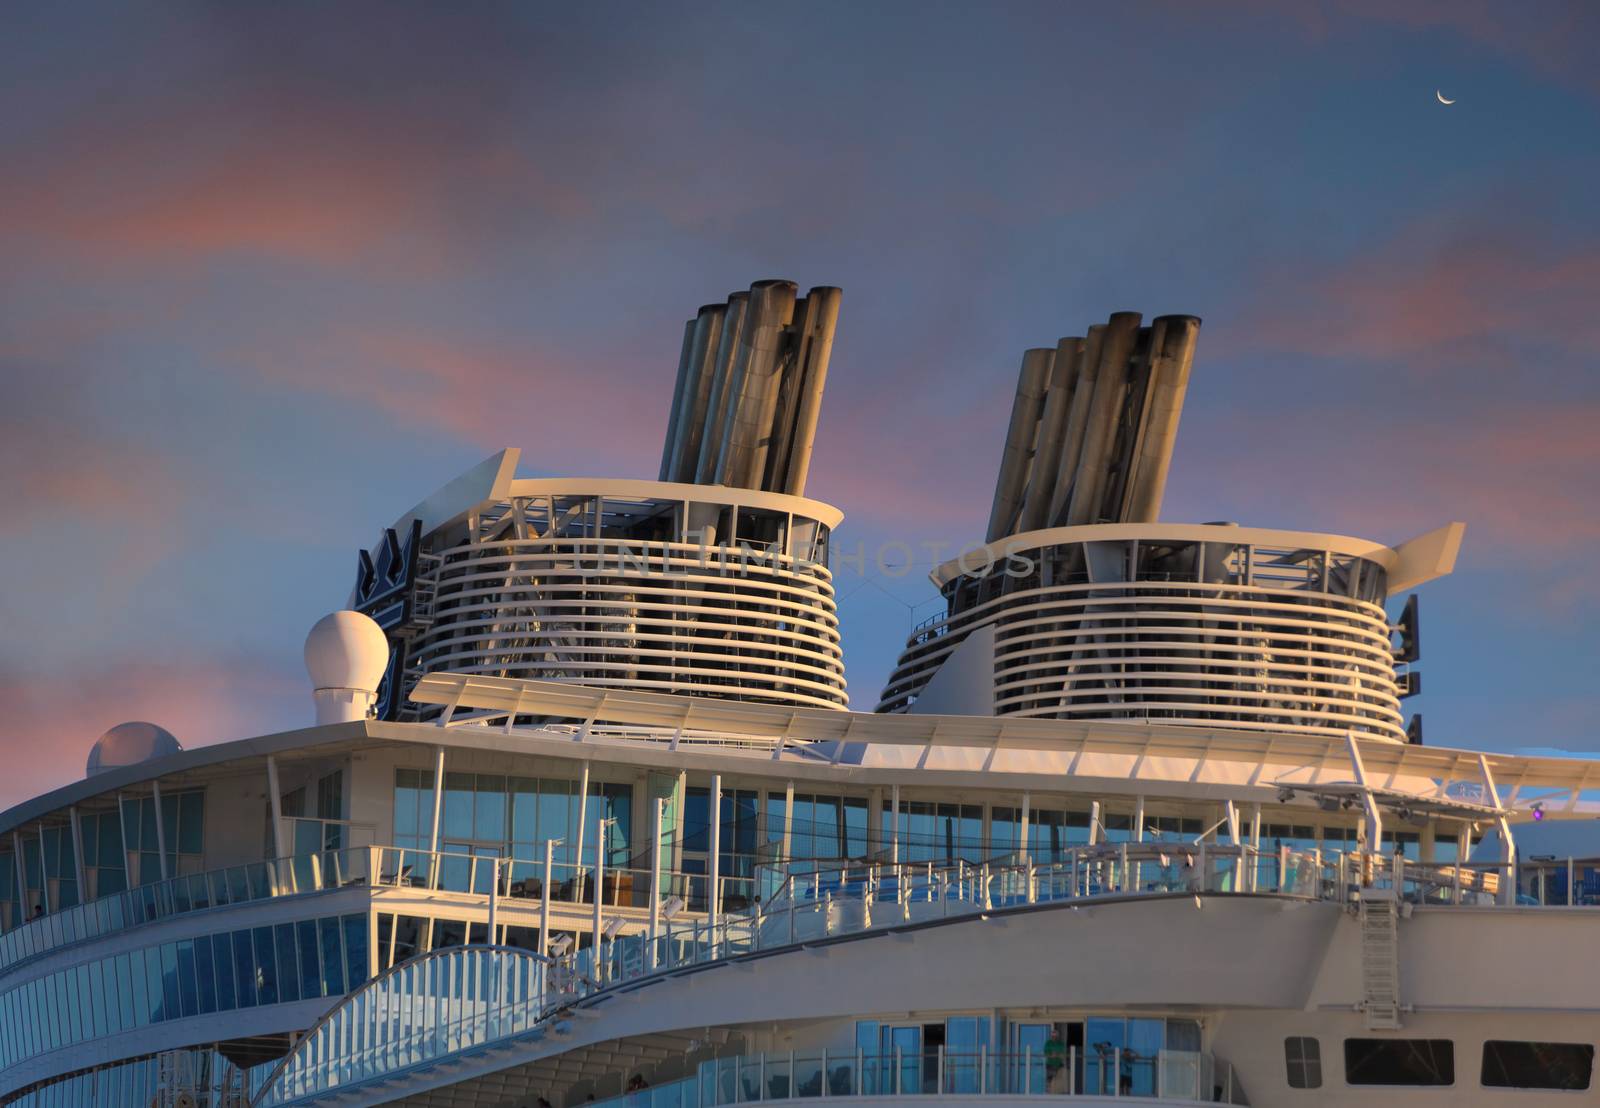 Twin Smokestacks on a Luxury Cruise ship